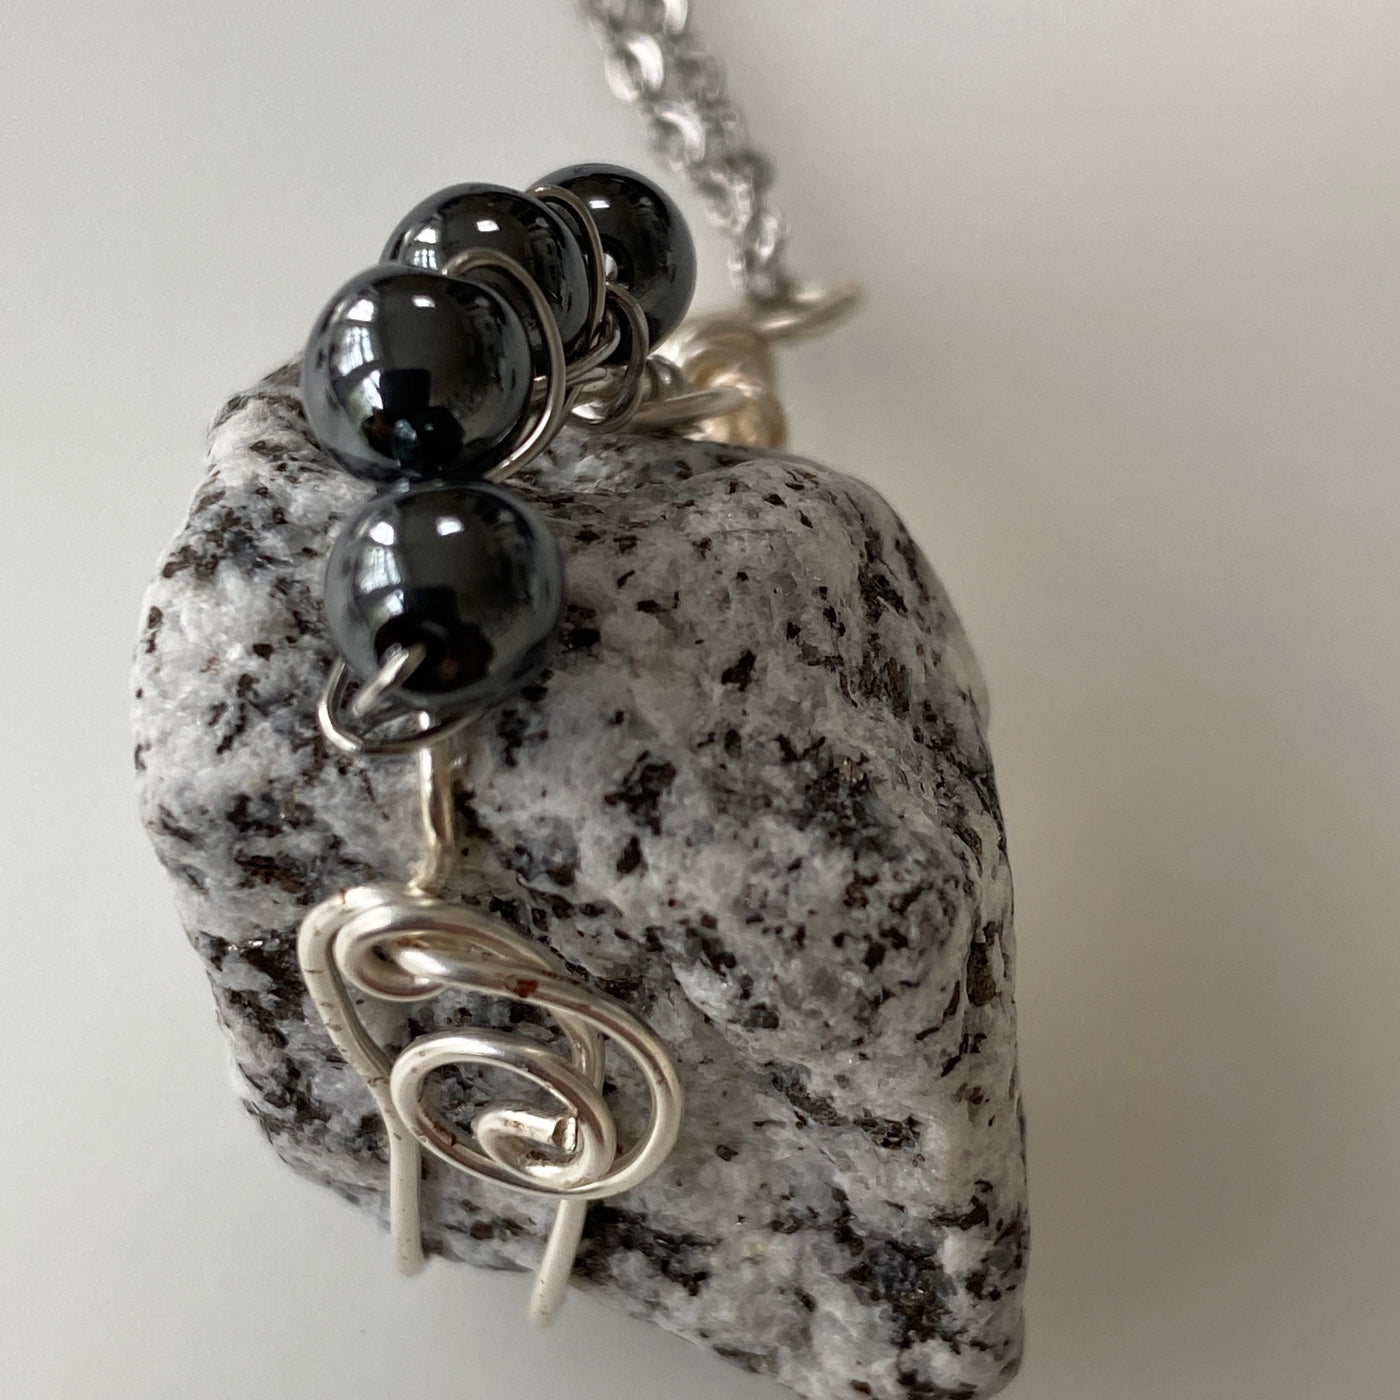 White and black natural stone, hematite and silver wire heavy pendant.